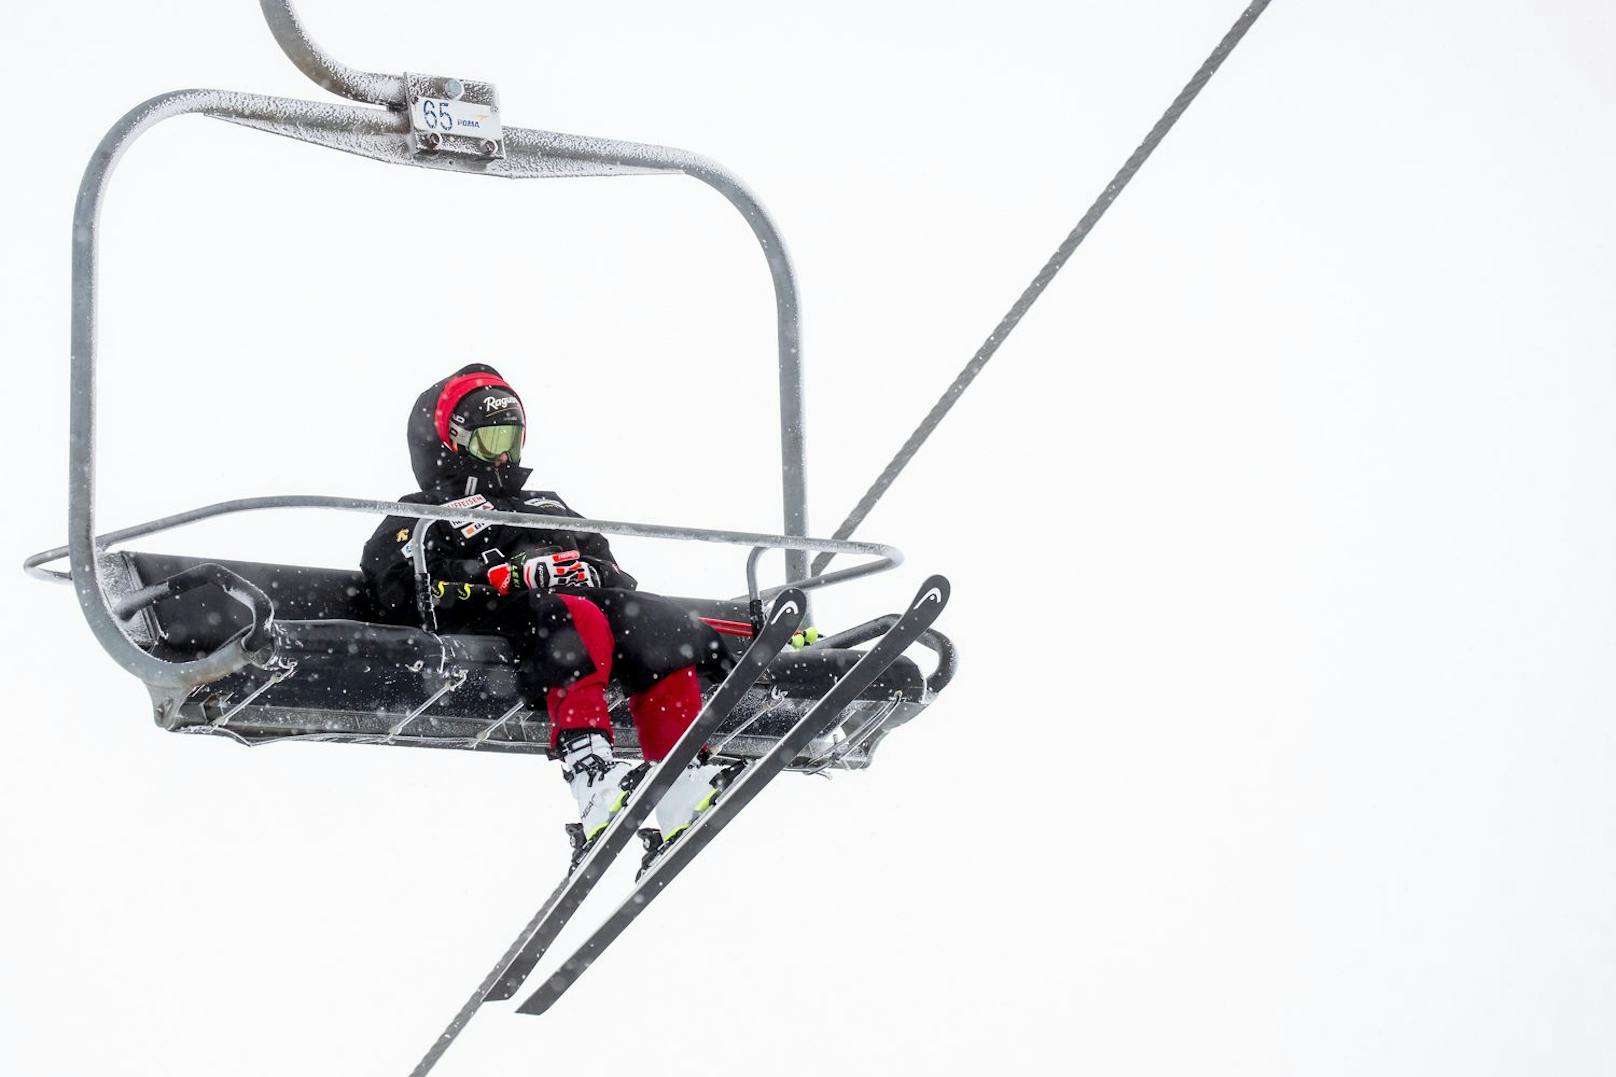 Atemprobleme – Sorge um Ski-Star nach erstem Training